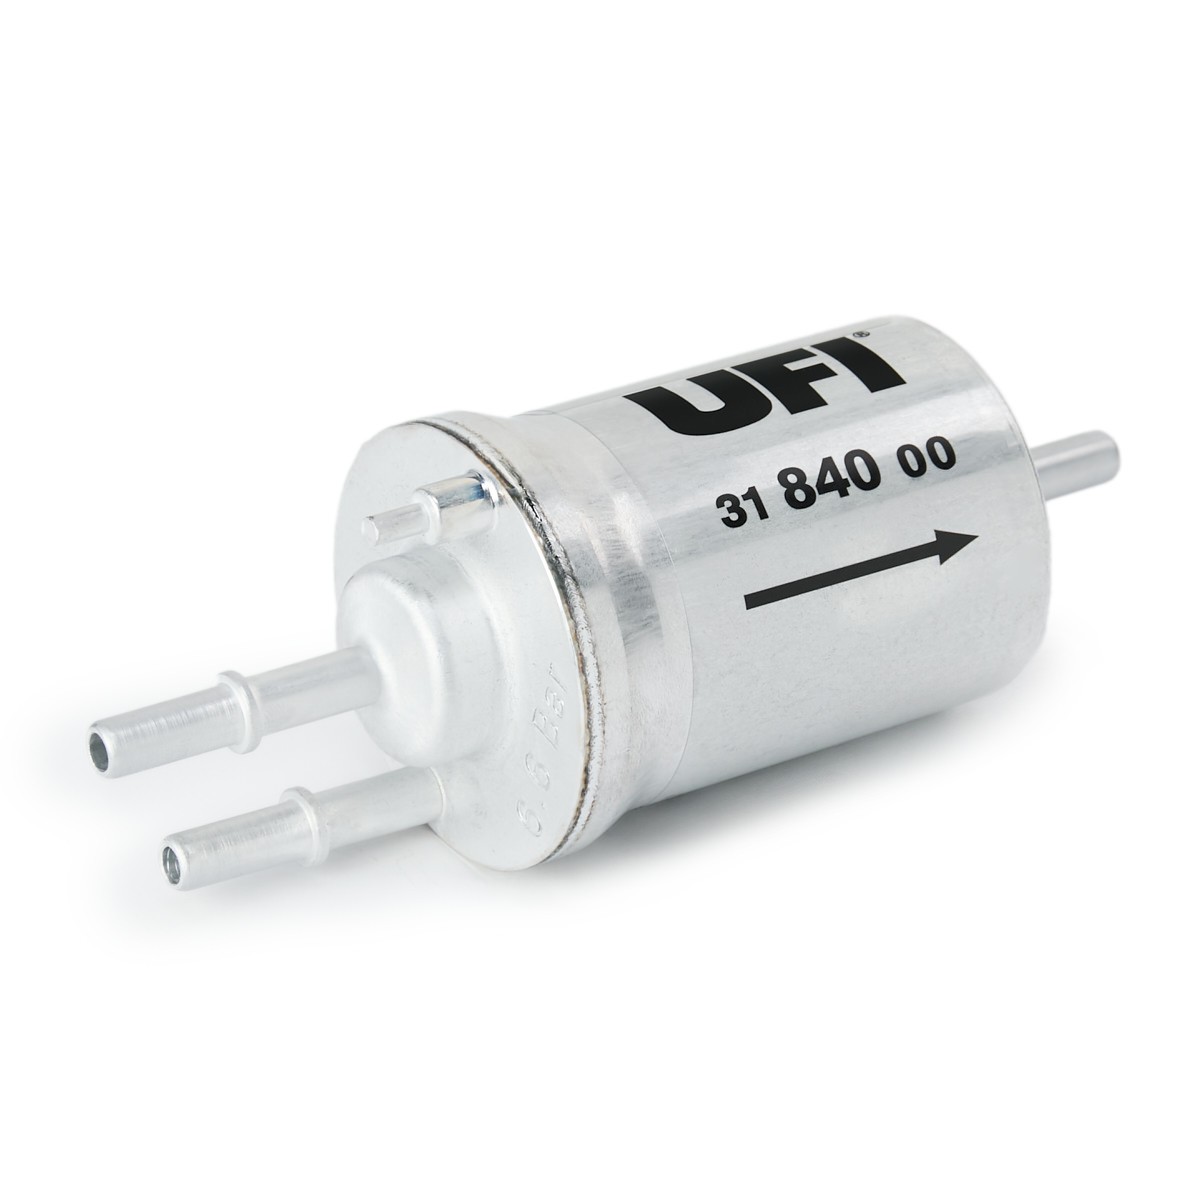 UFI 31.840.00 Skoda ROOMSTER 2014 Inline fuel filter